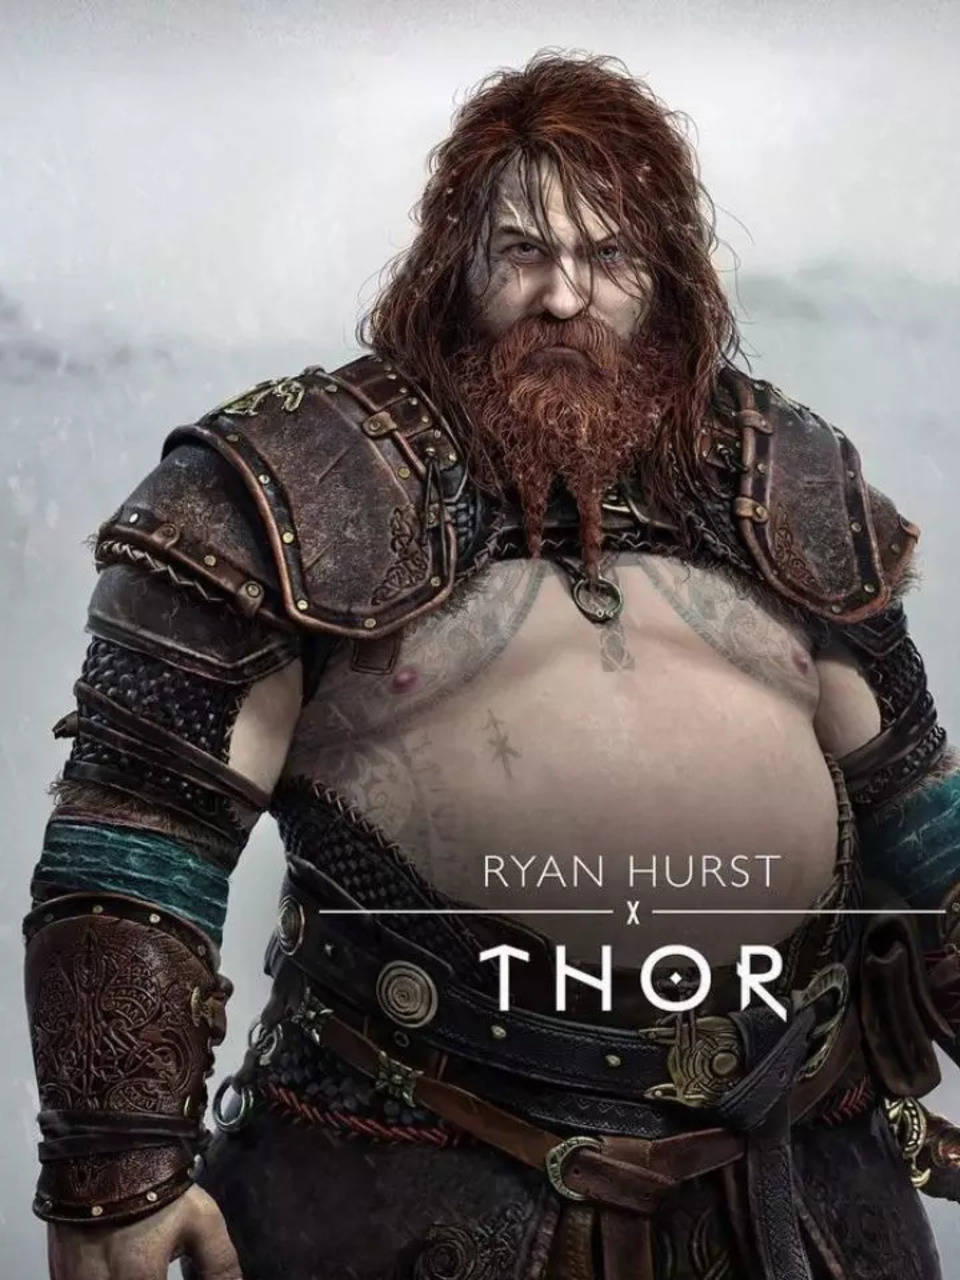 Who voices Thor in God of War: Ragnarok?